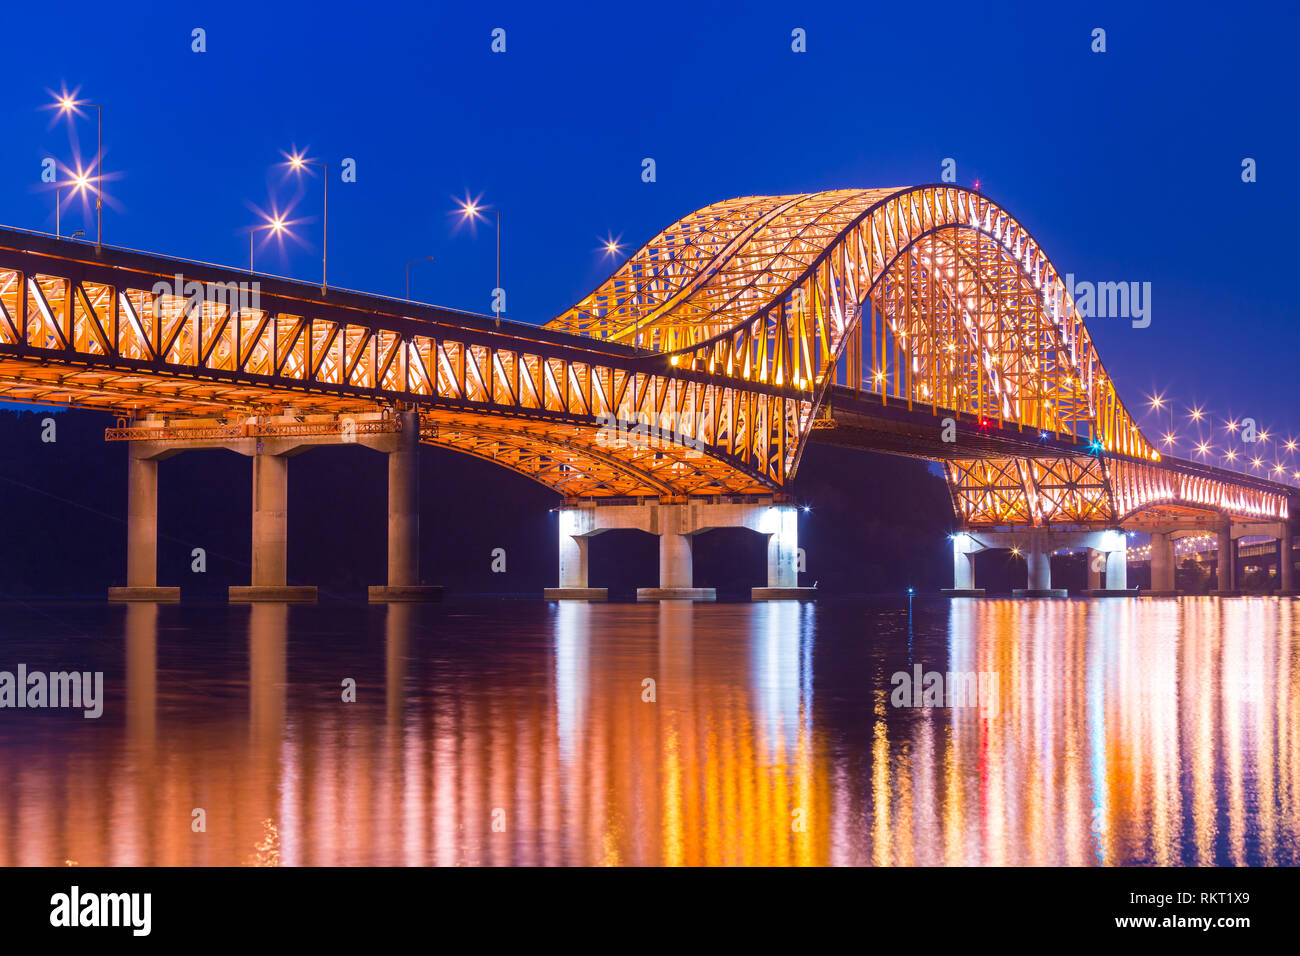 light the night of banghwa bridge, beautiful han river, South Korea. Stock Photo